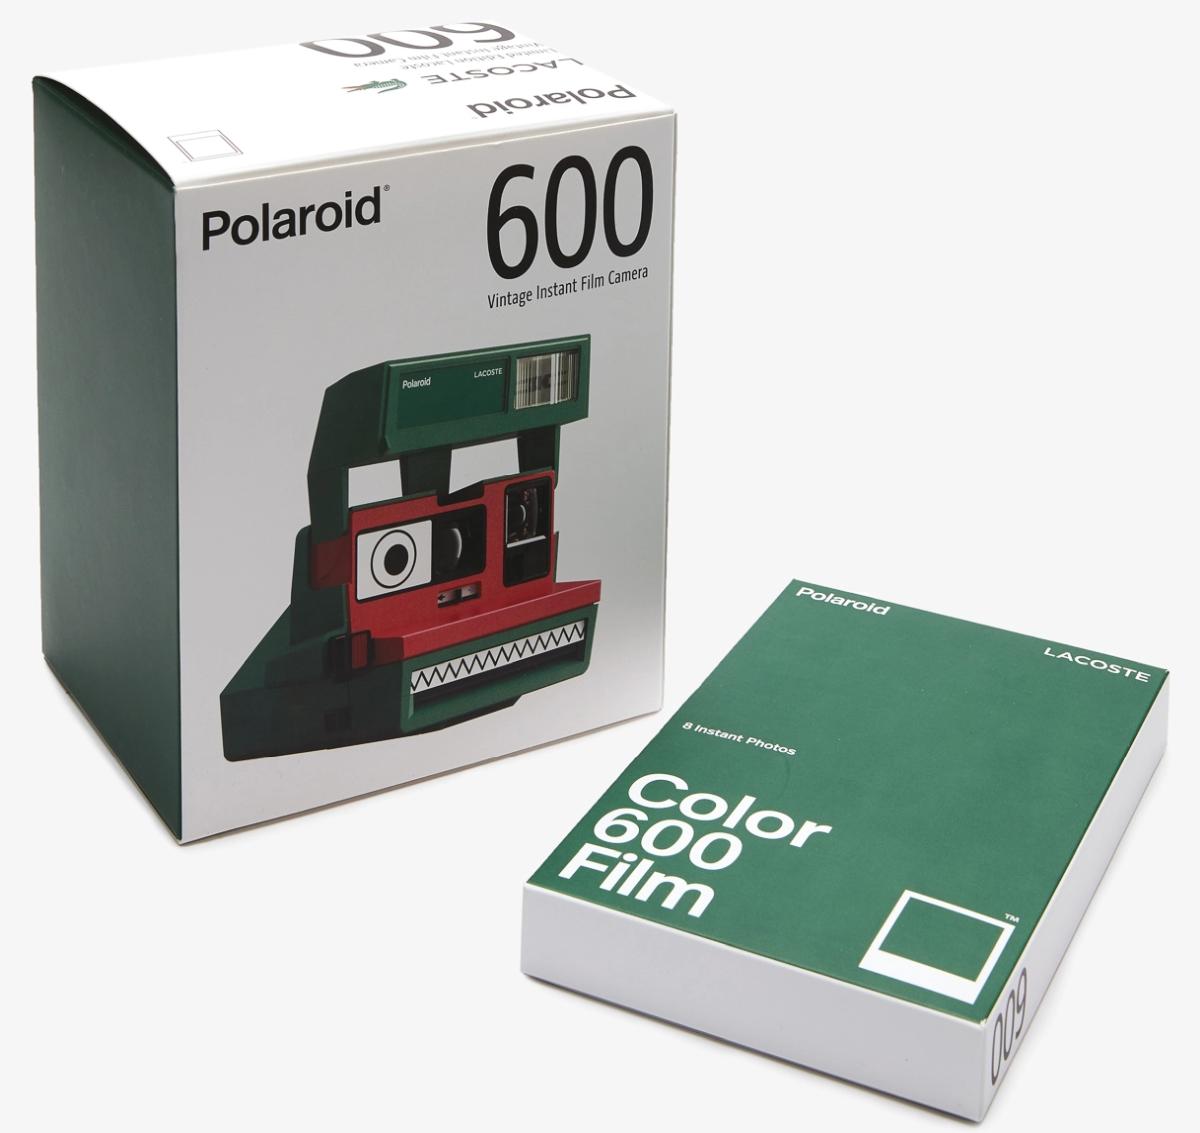 Lacoste X Polaroid 600 Instant Film Camera 3